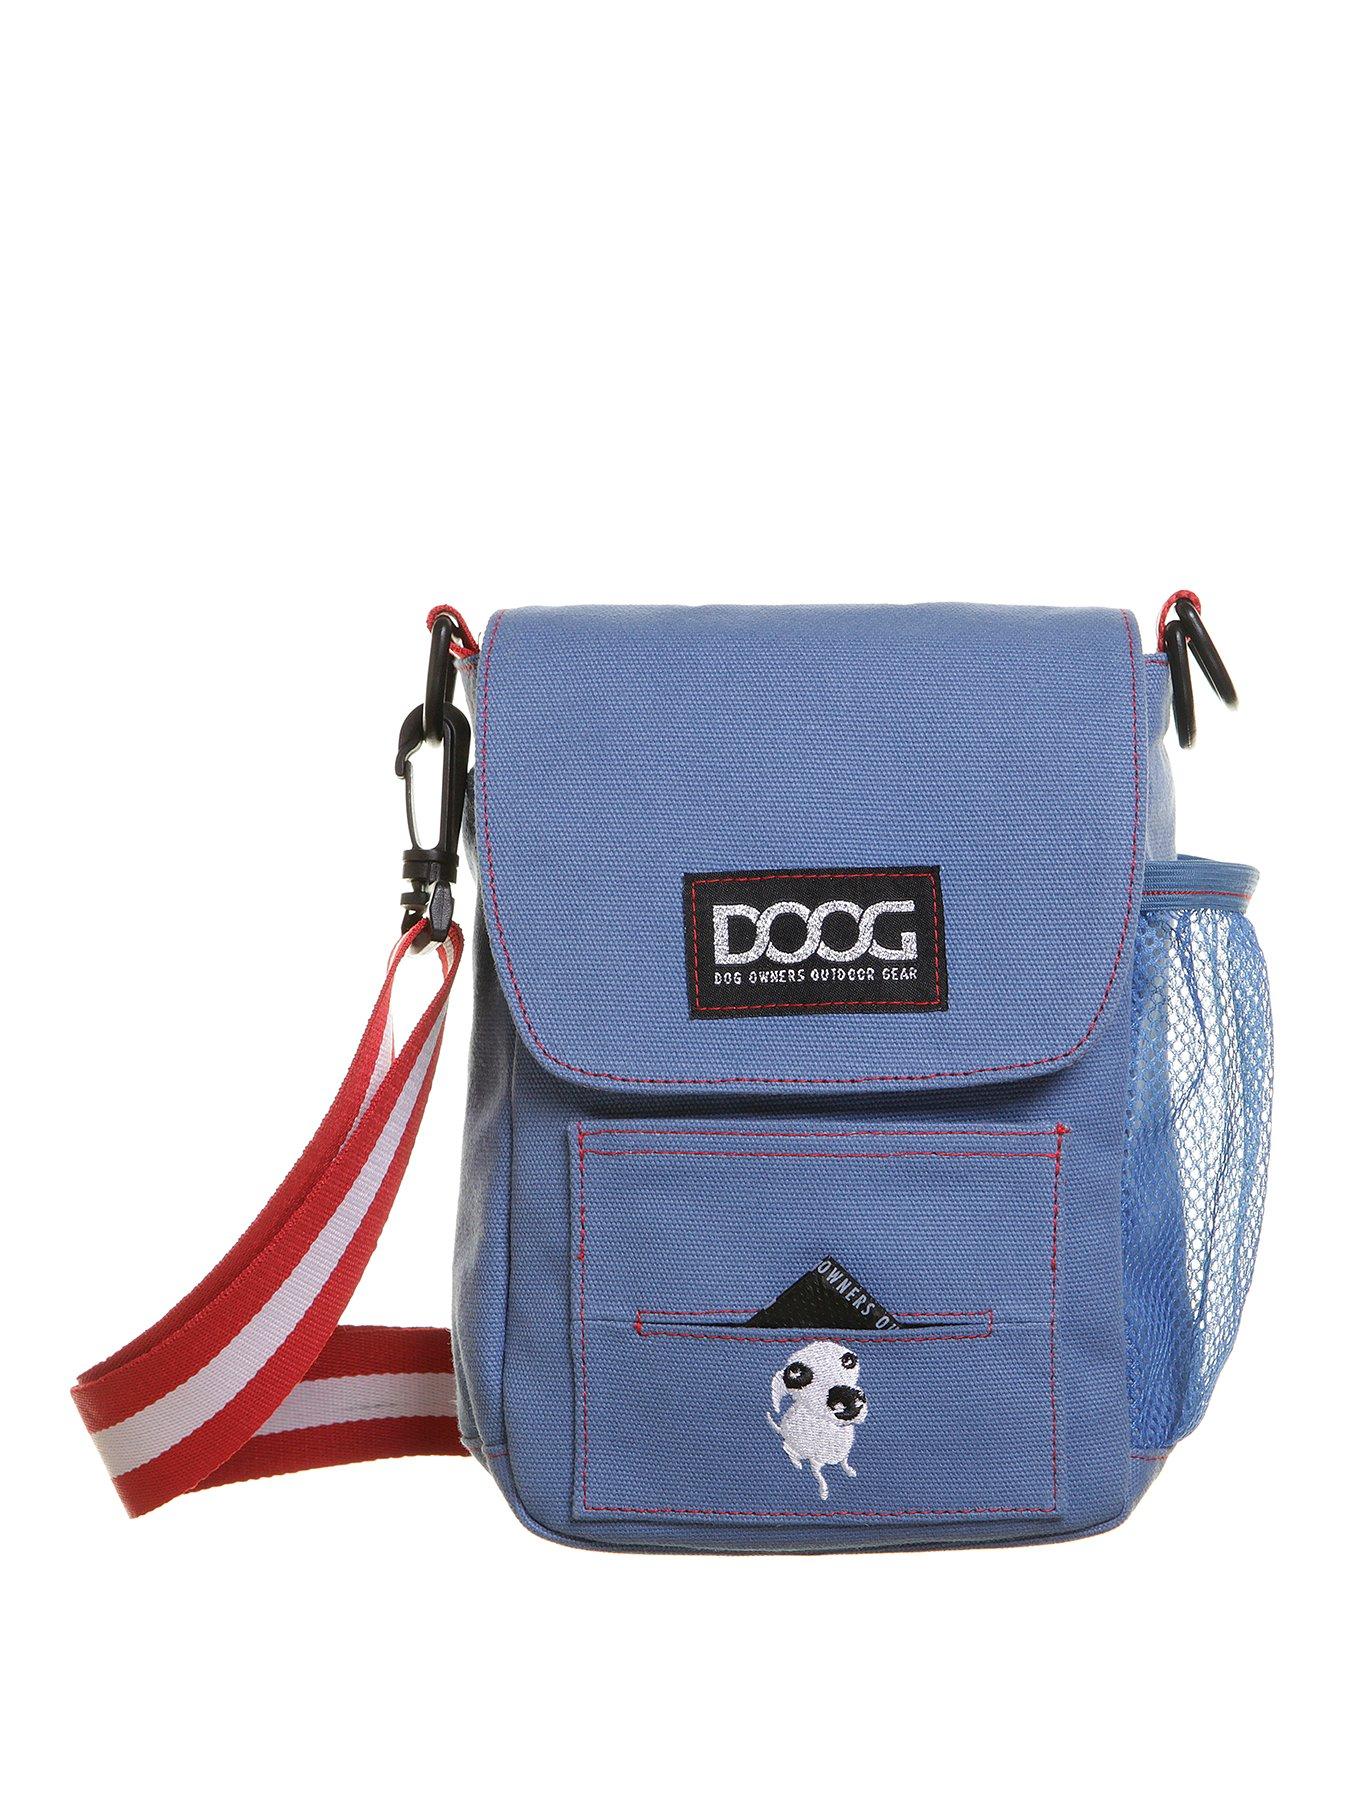 Product photograph of Doog Dog Walking Shoulder Bag- Blue from very.co.uk